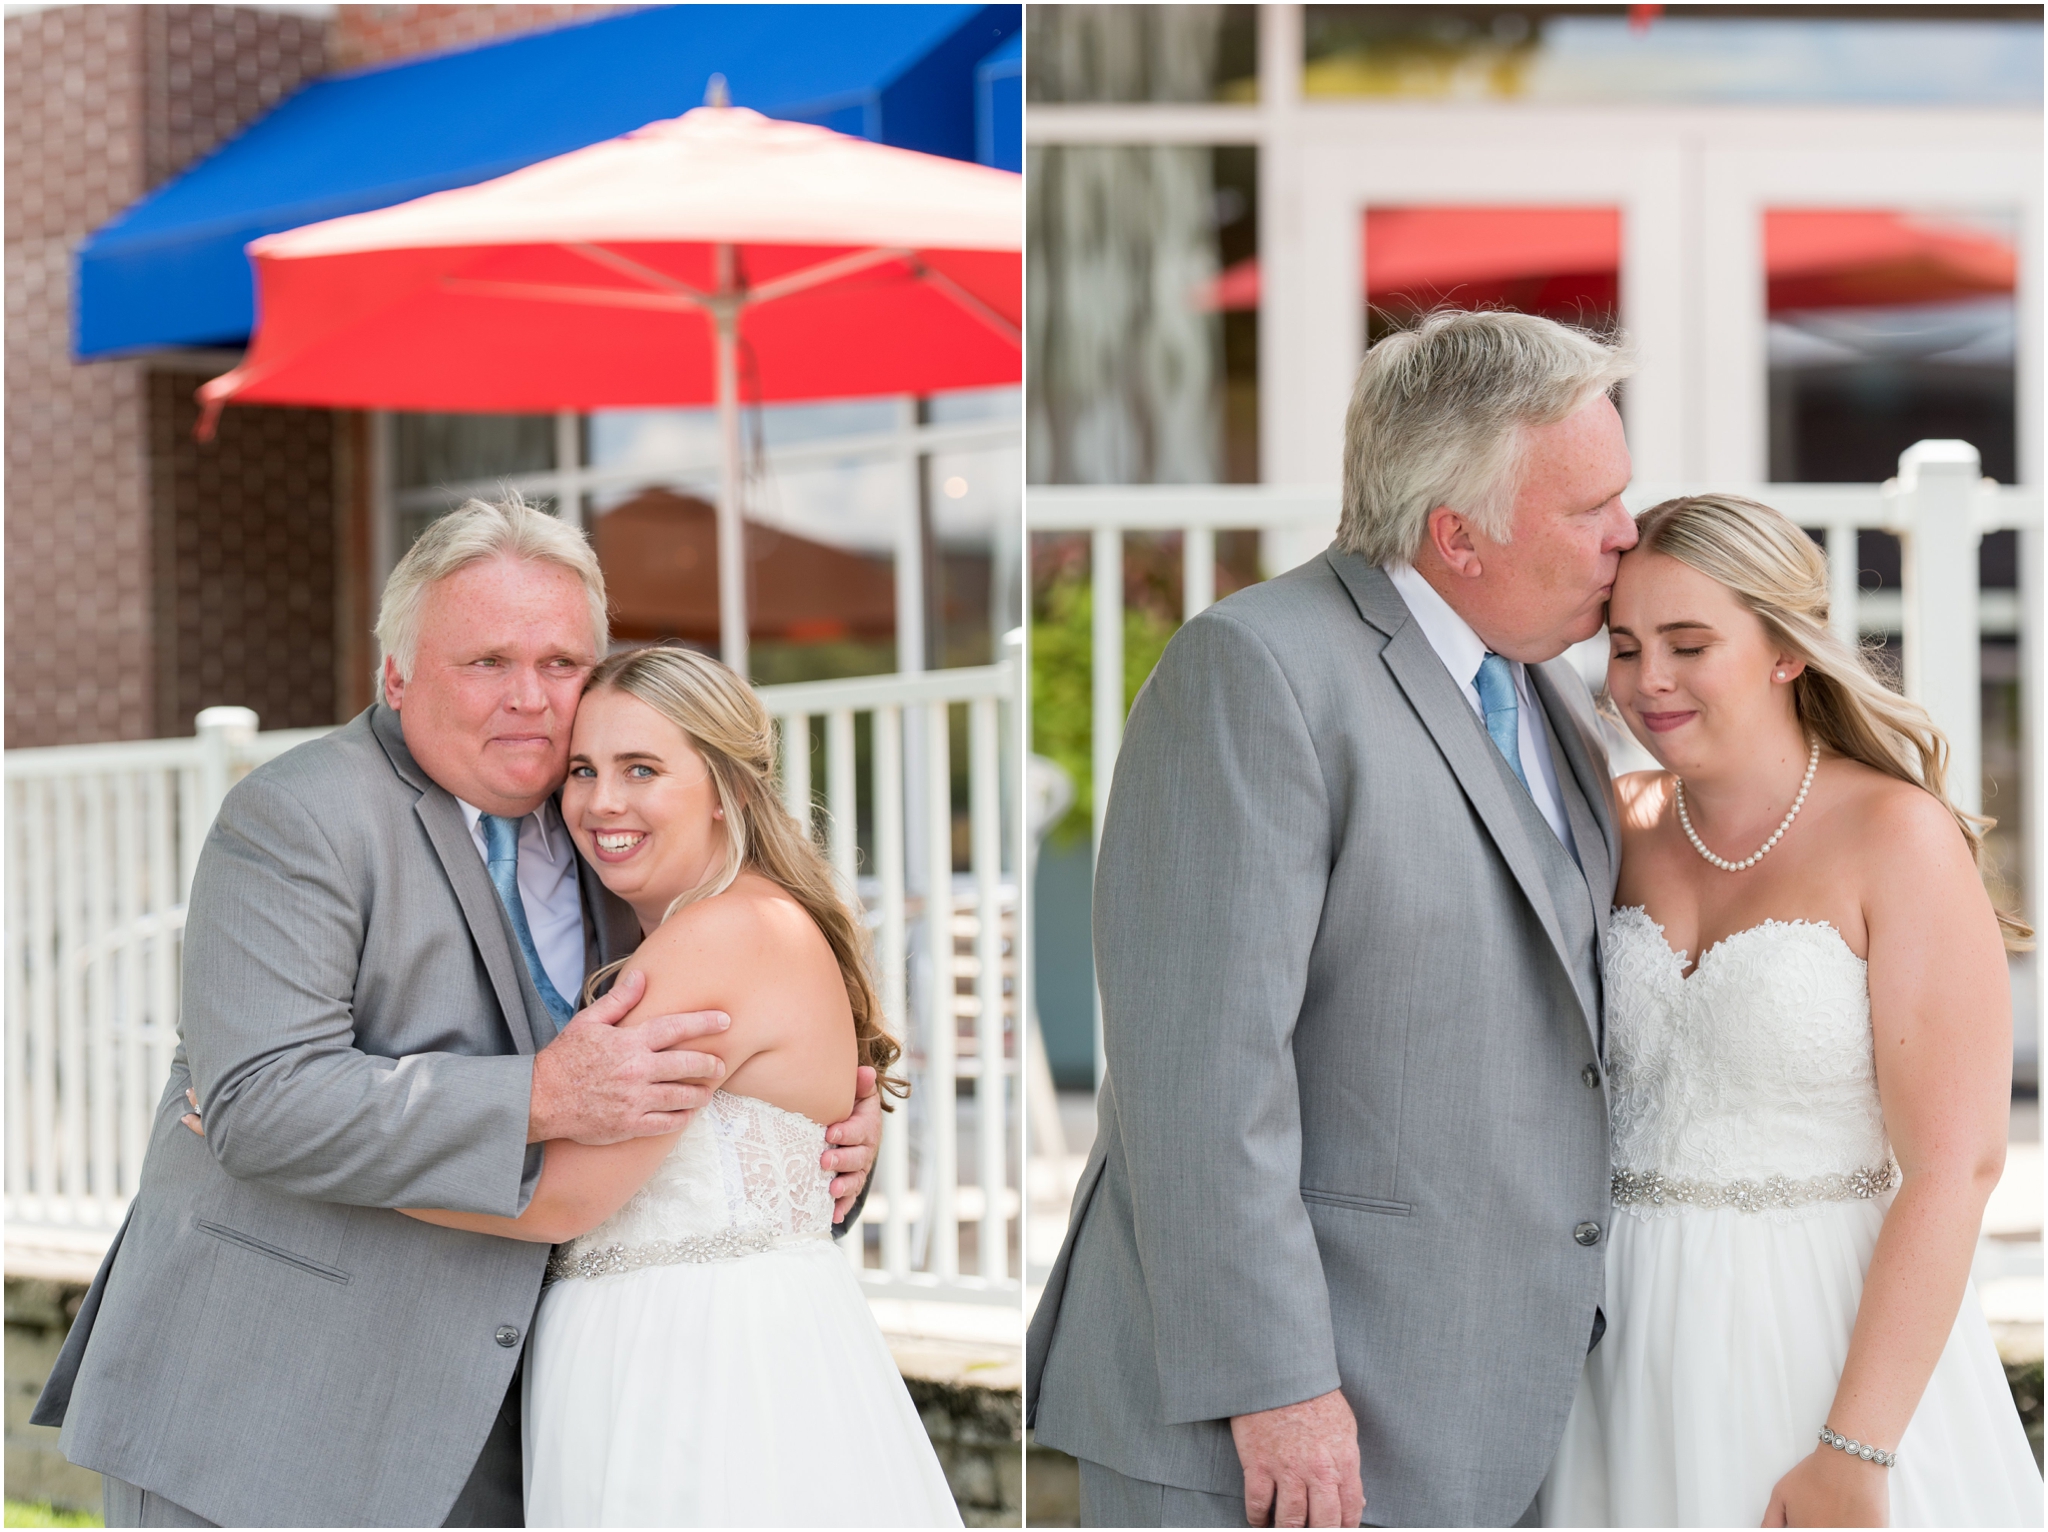 Colin + Megan | The Commons Wedding | Columbus, Indiana | royal blue wedding colors